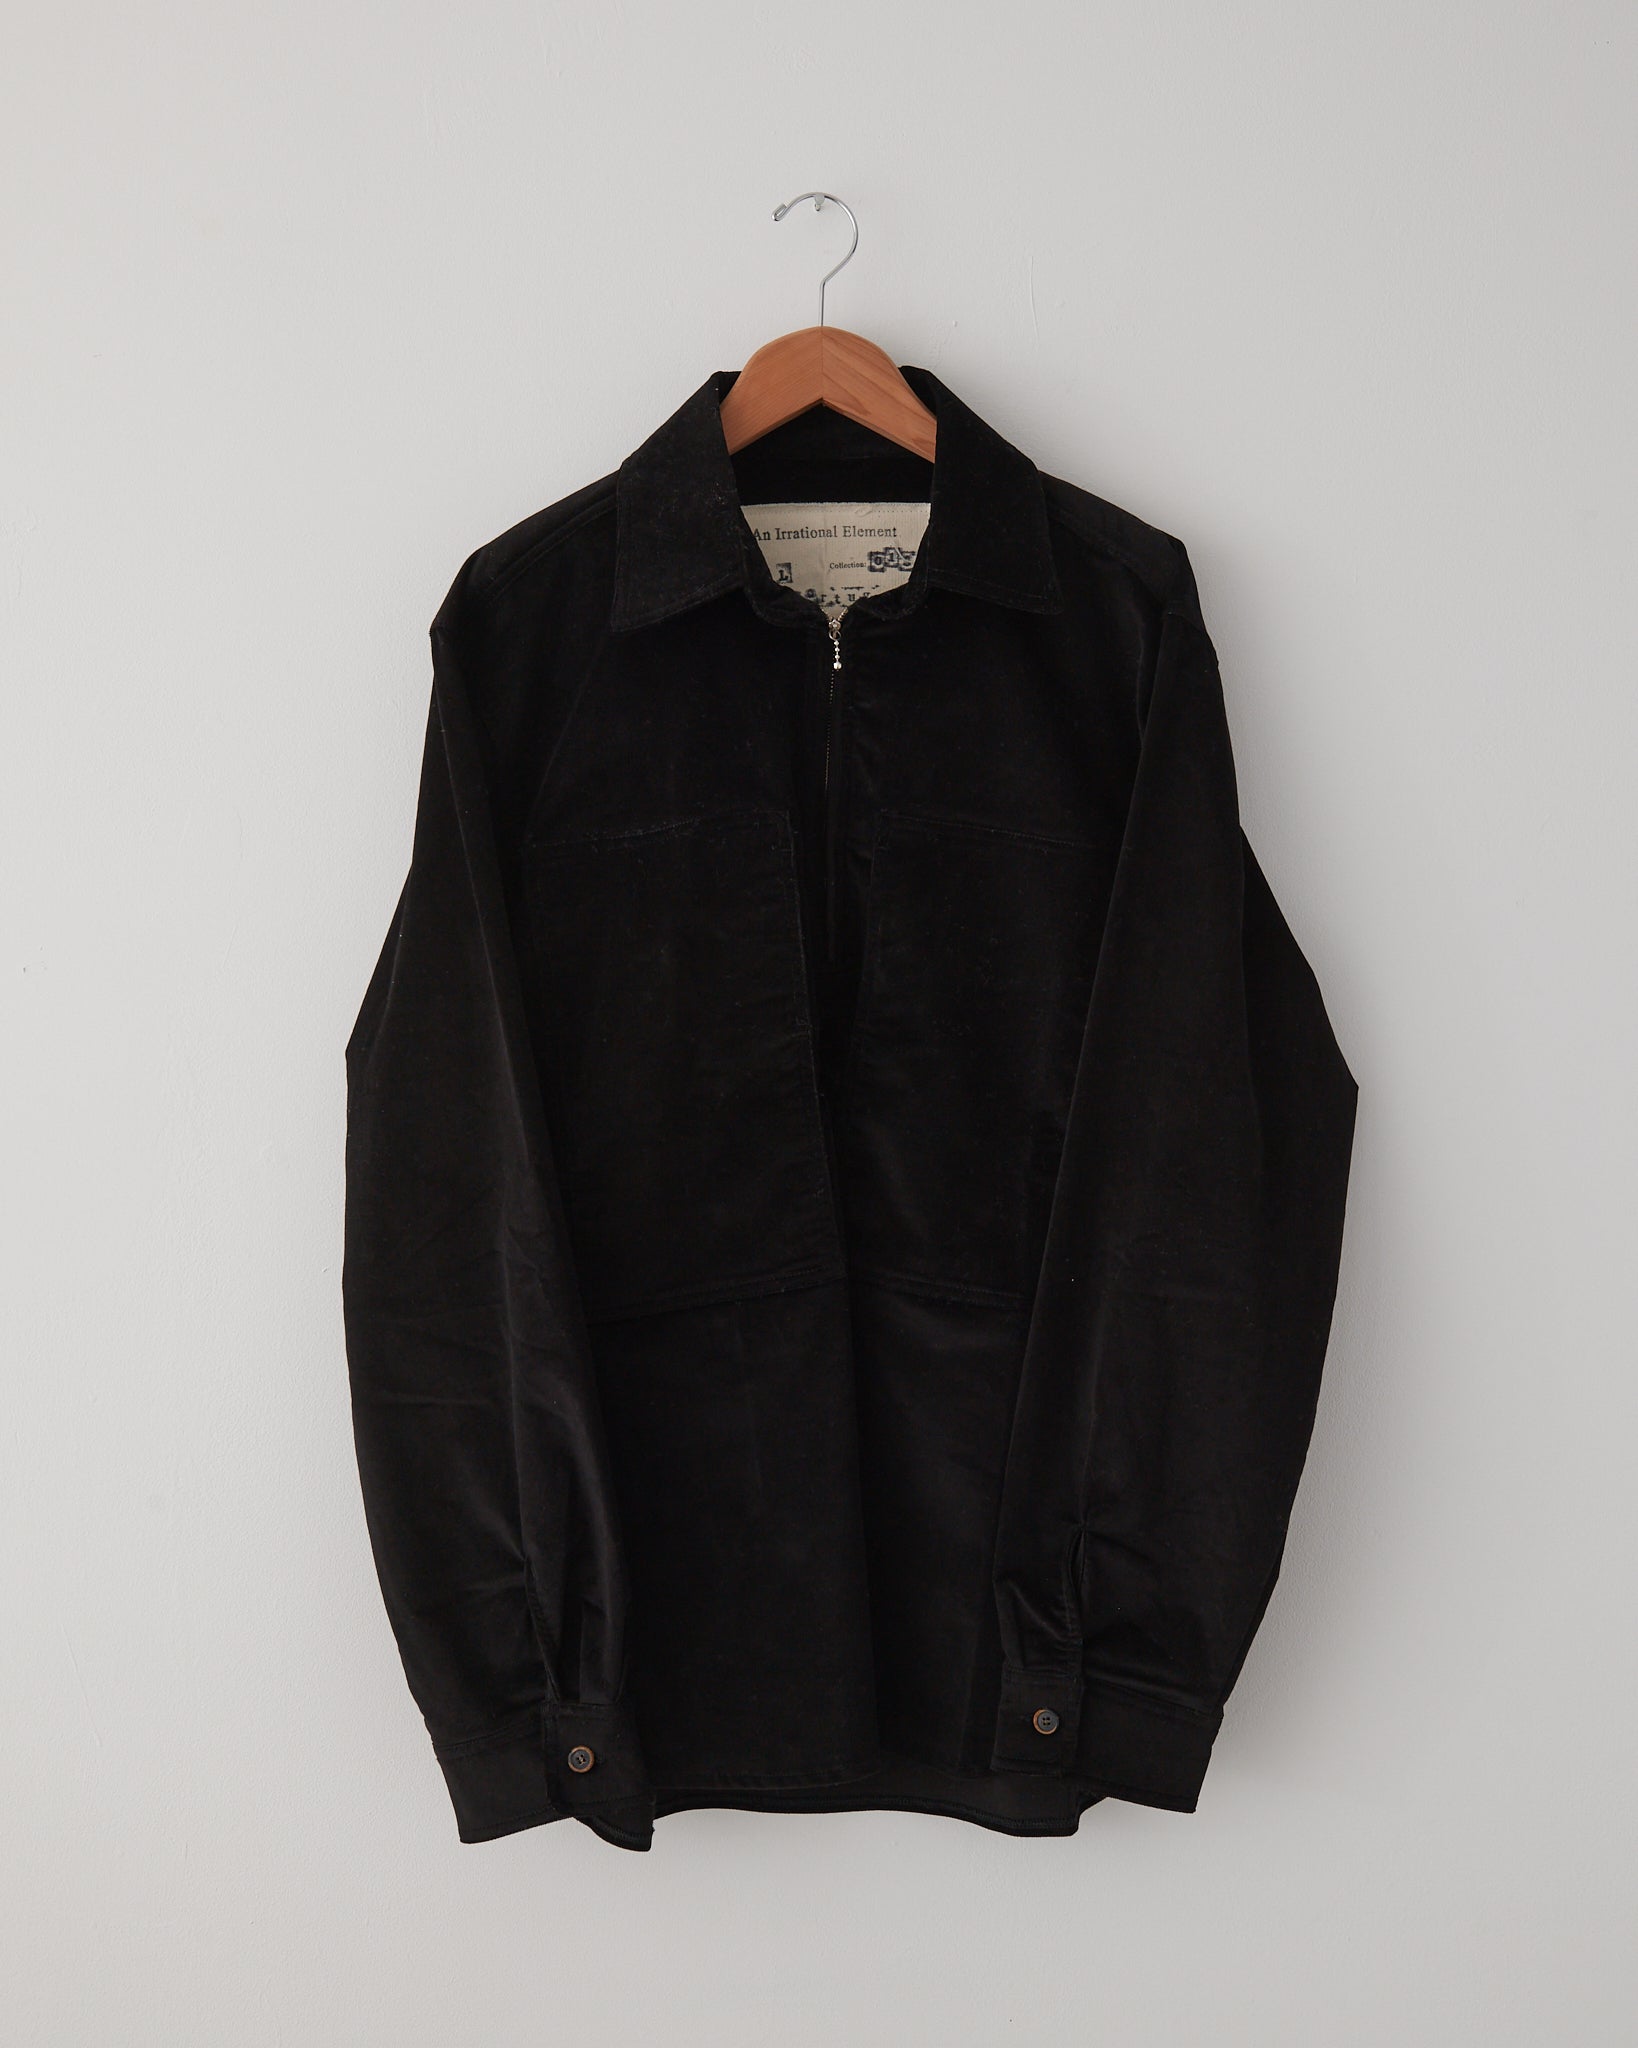 Vintage Shirt, Black Cotton Corduroy